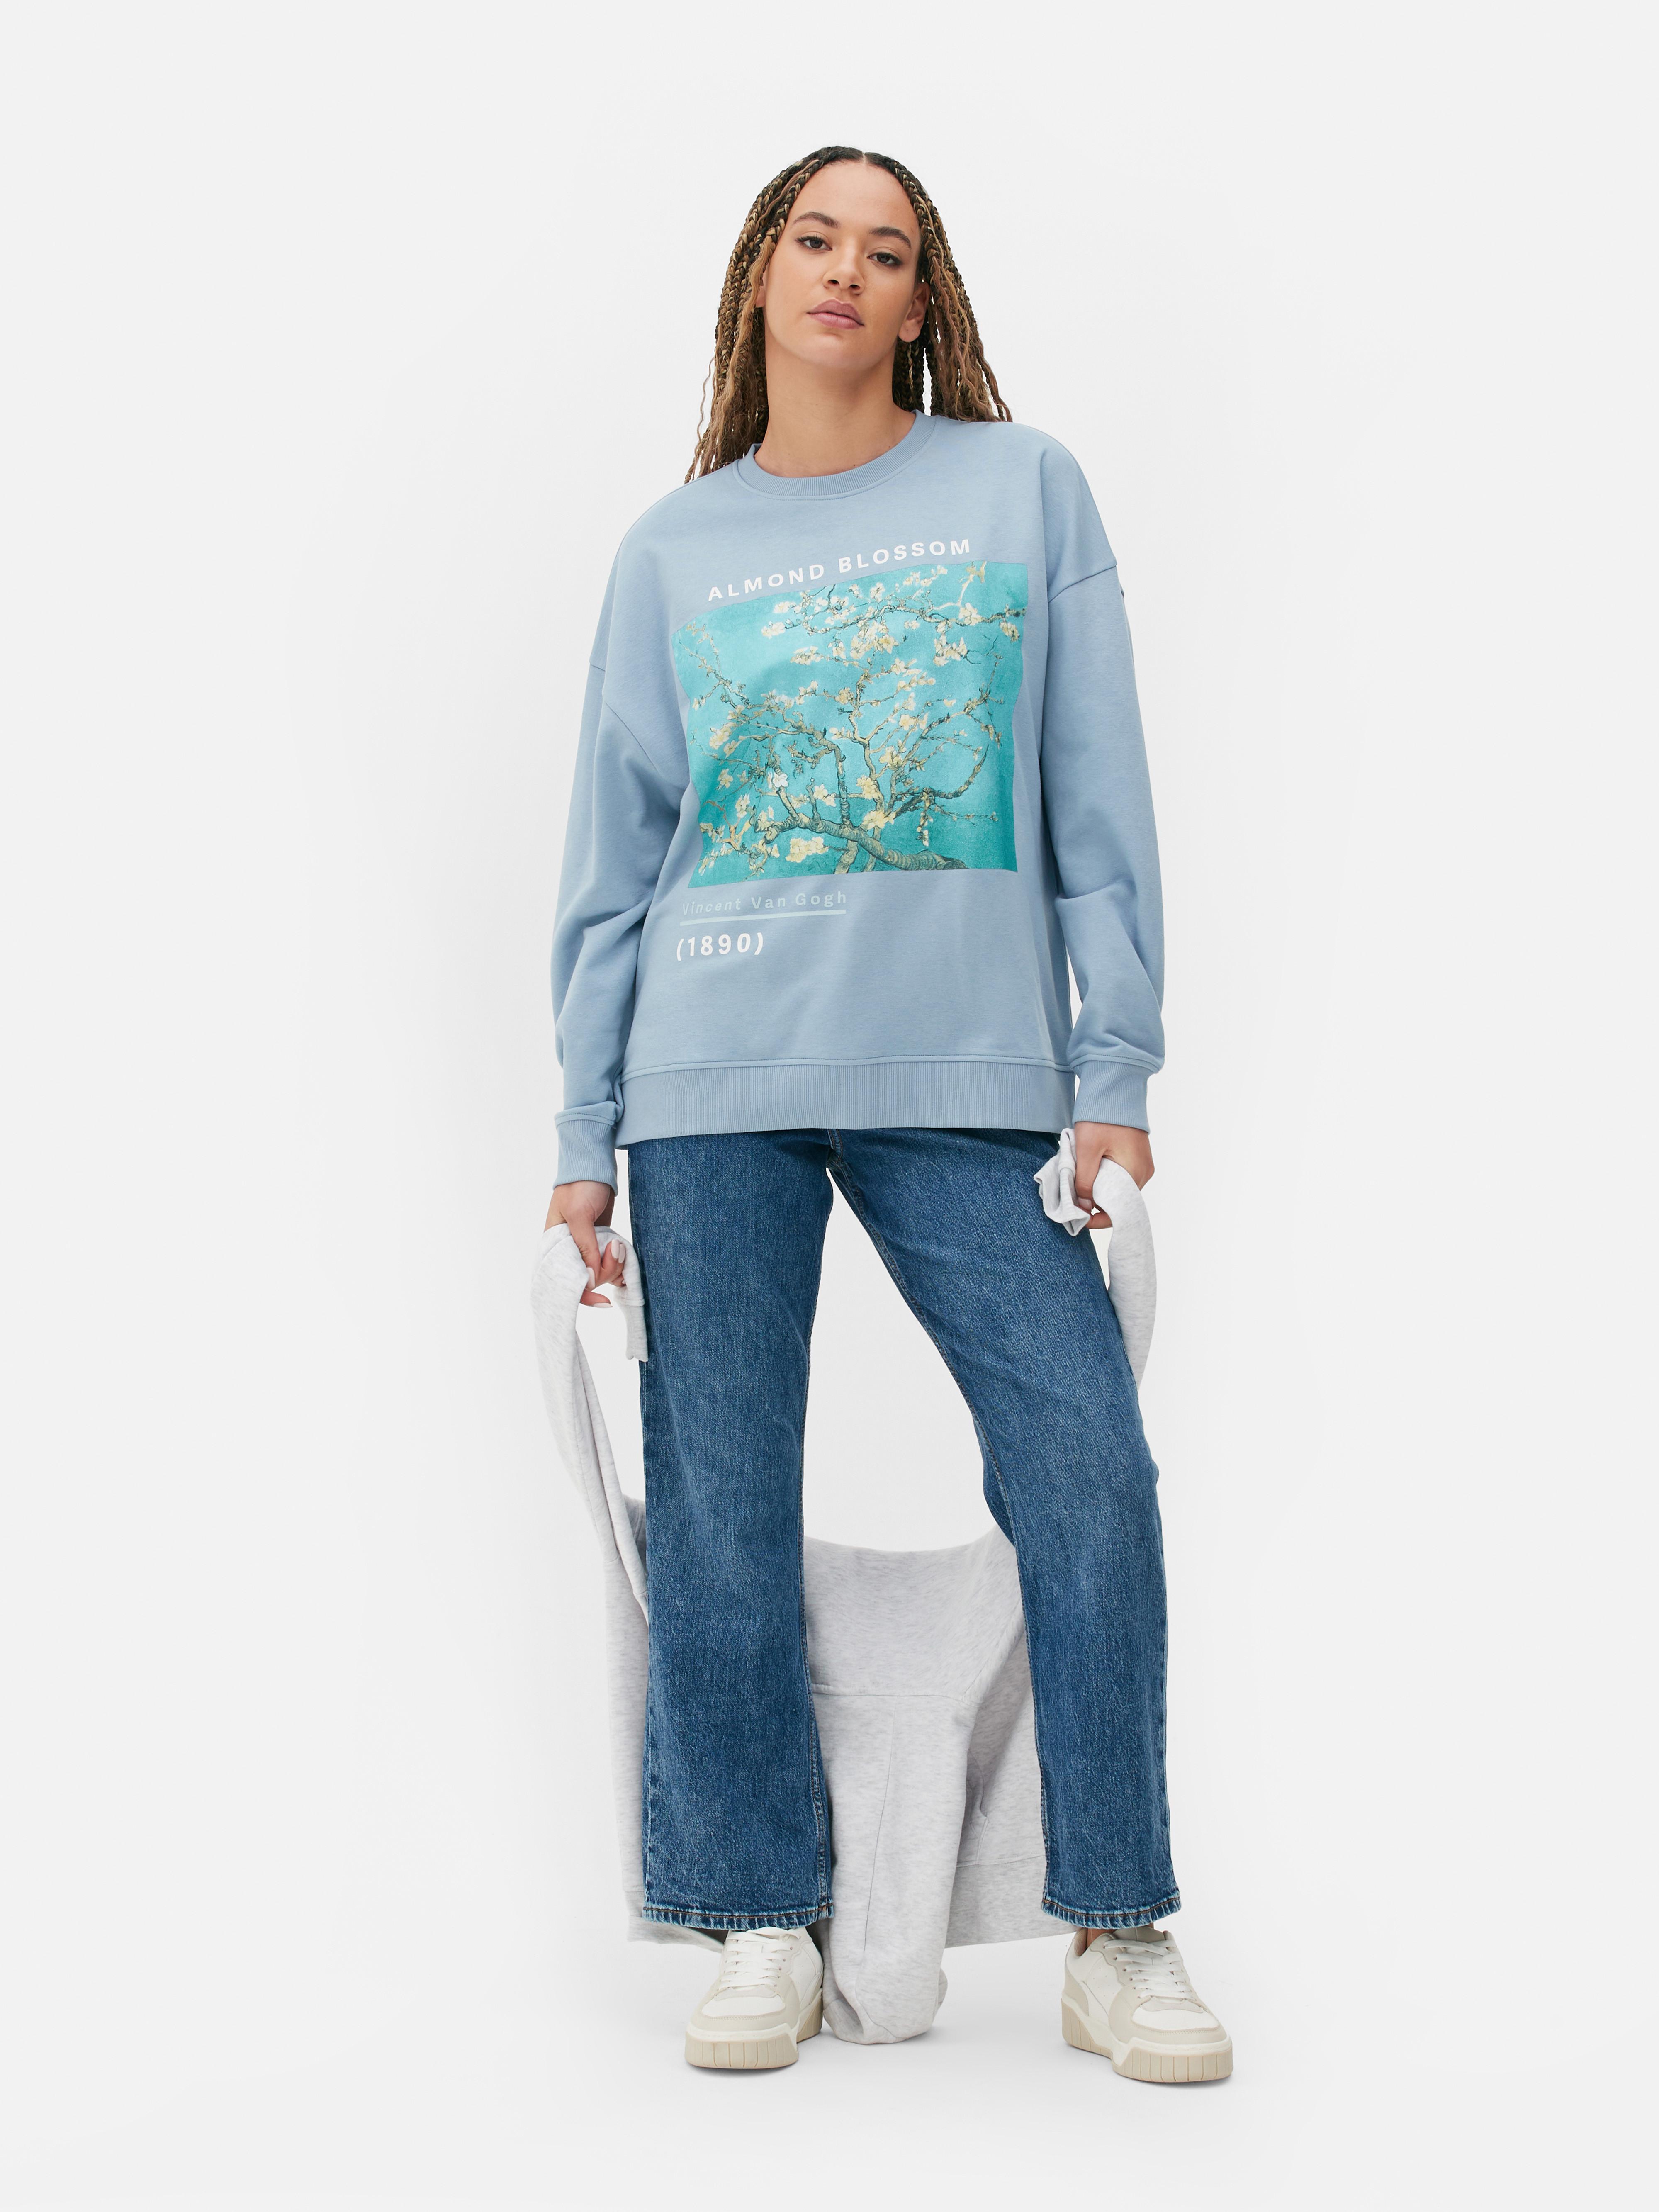 Van Gogh Almond Blossom Sweatshirt